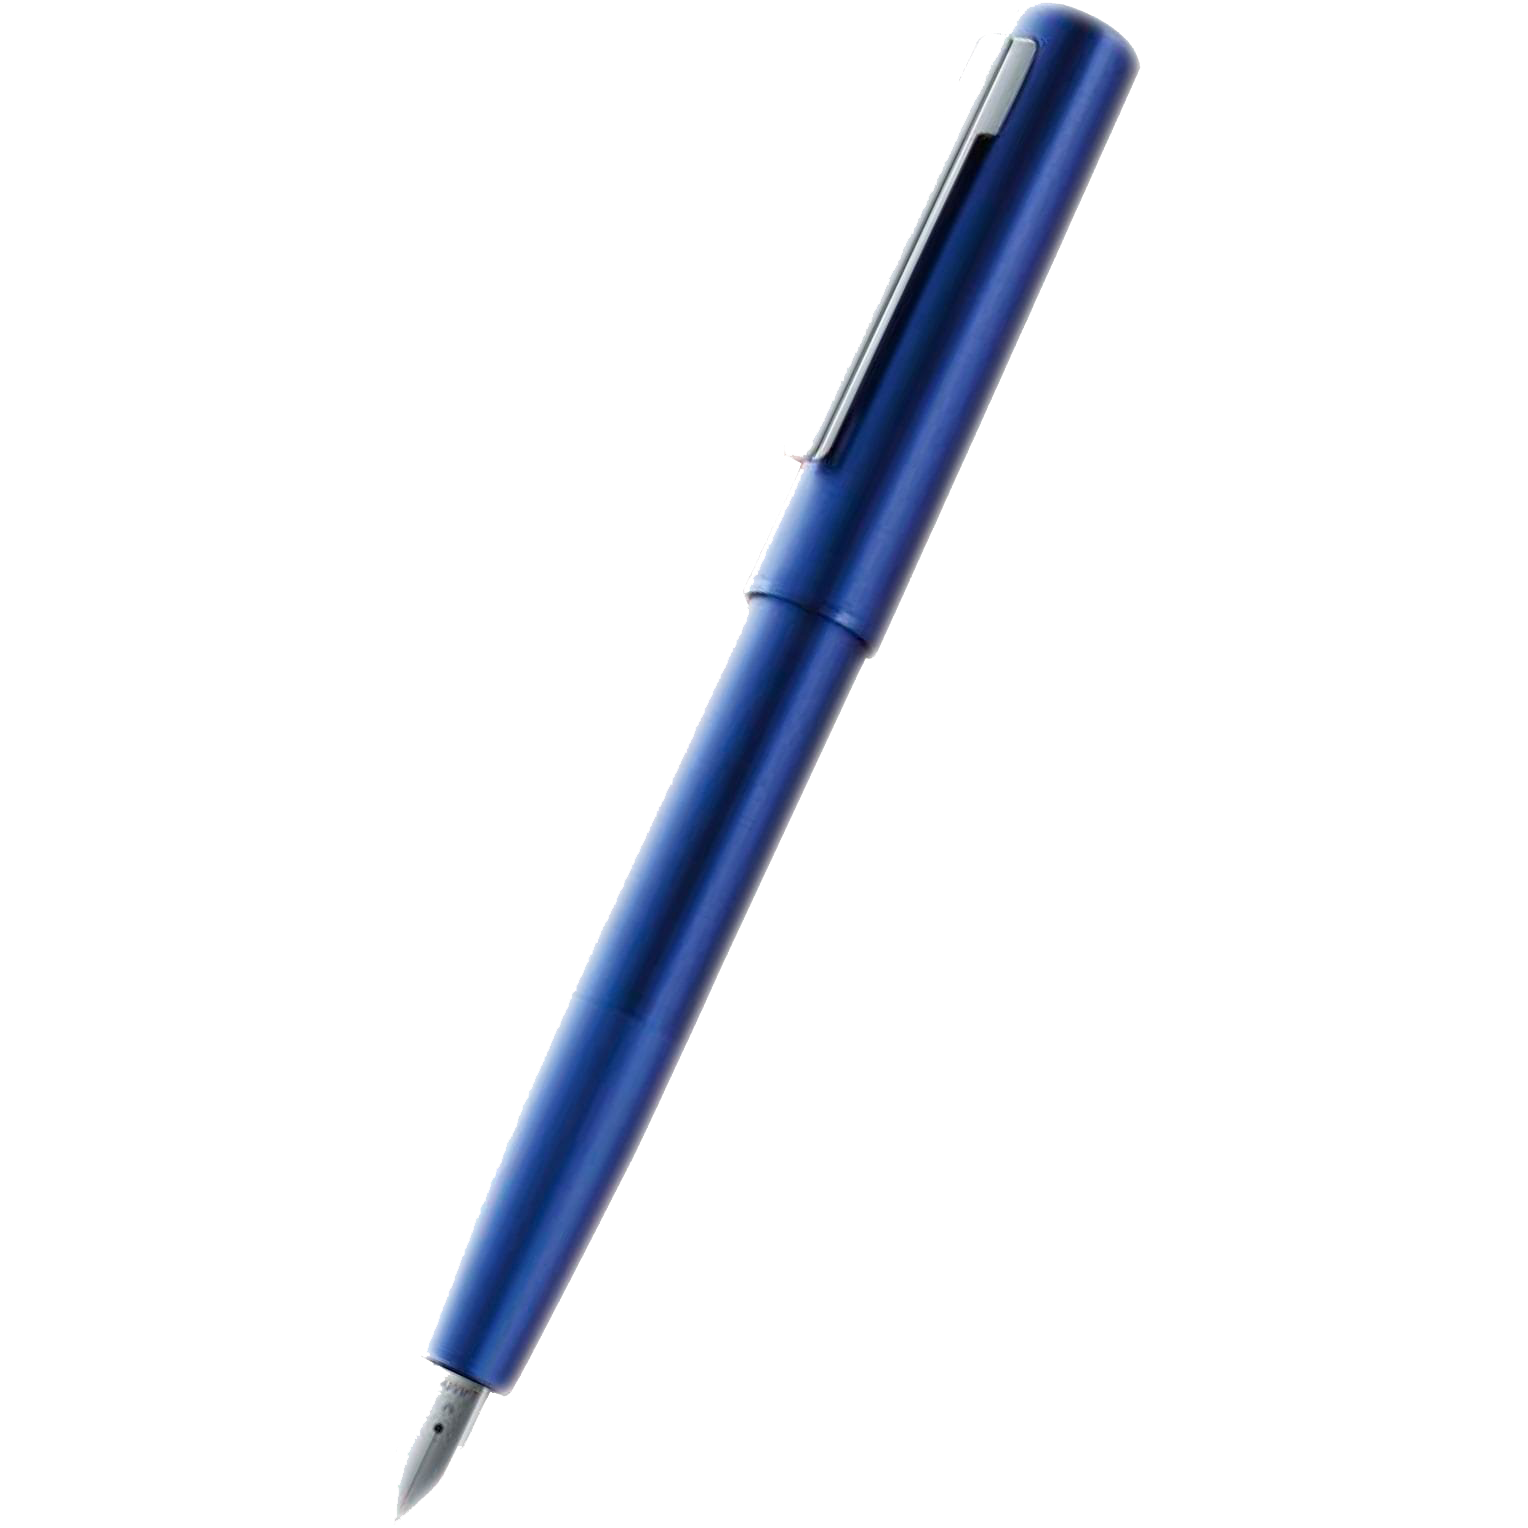 Blue Pen PNG Bild herunterladen Bild